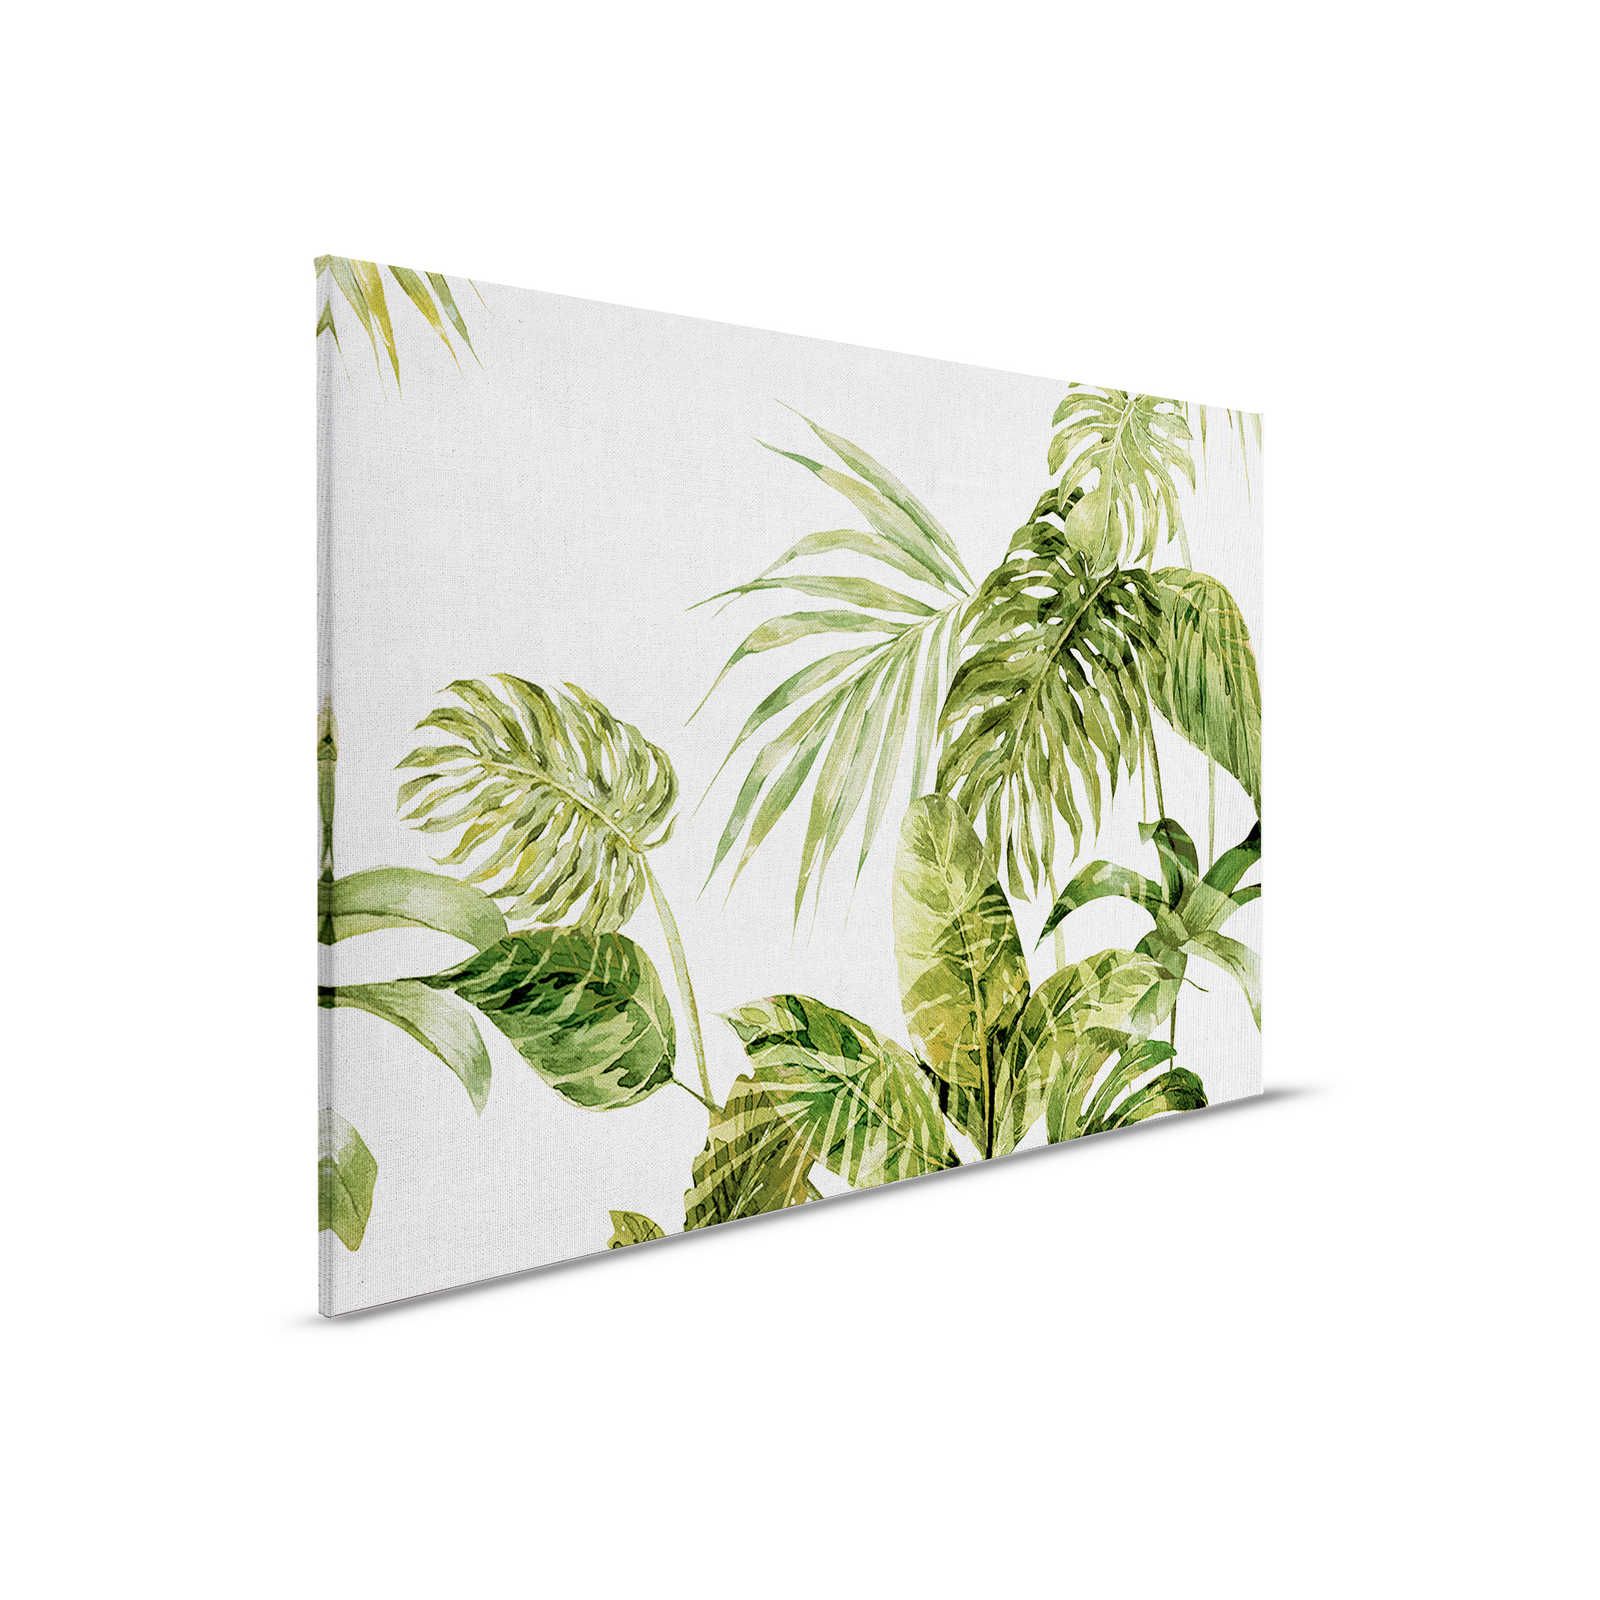 Toile tropicale Monstera feuilles style aquarelle - 0,90 m x 0,60 m
